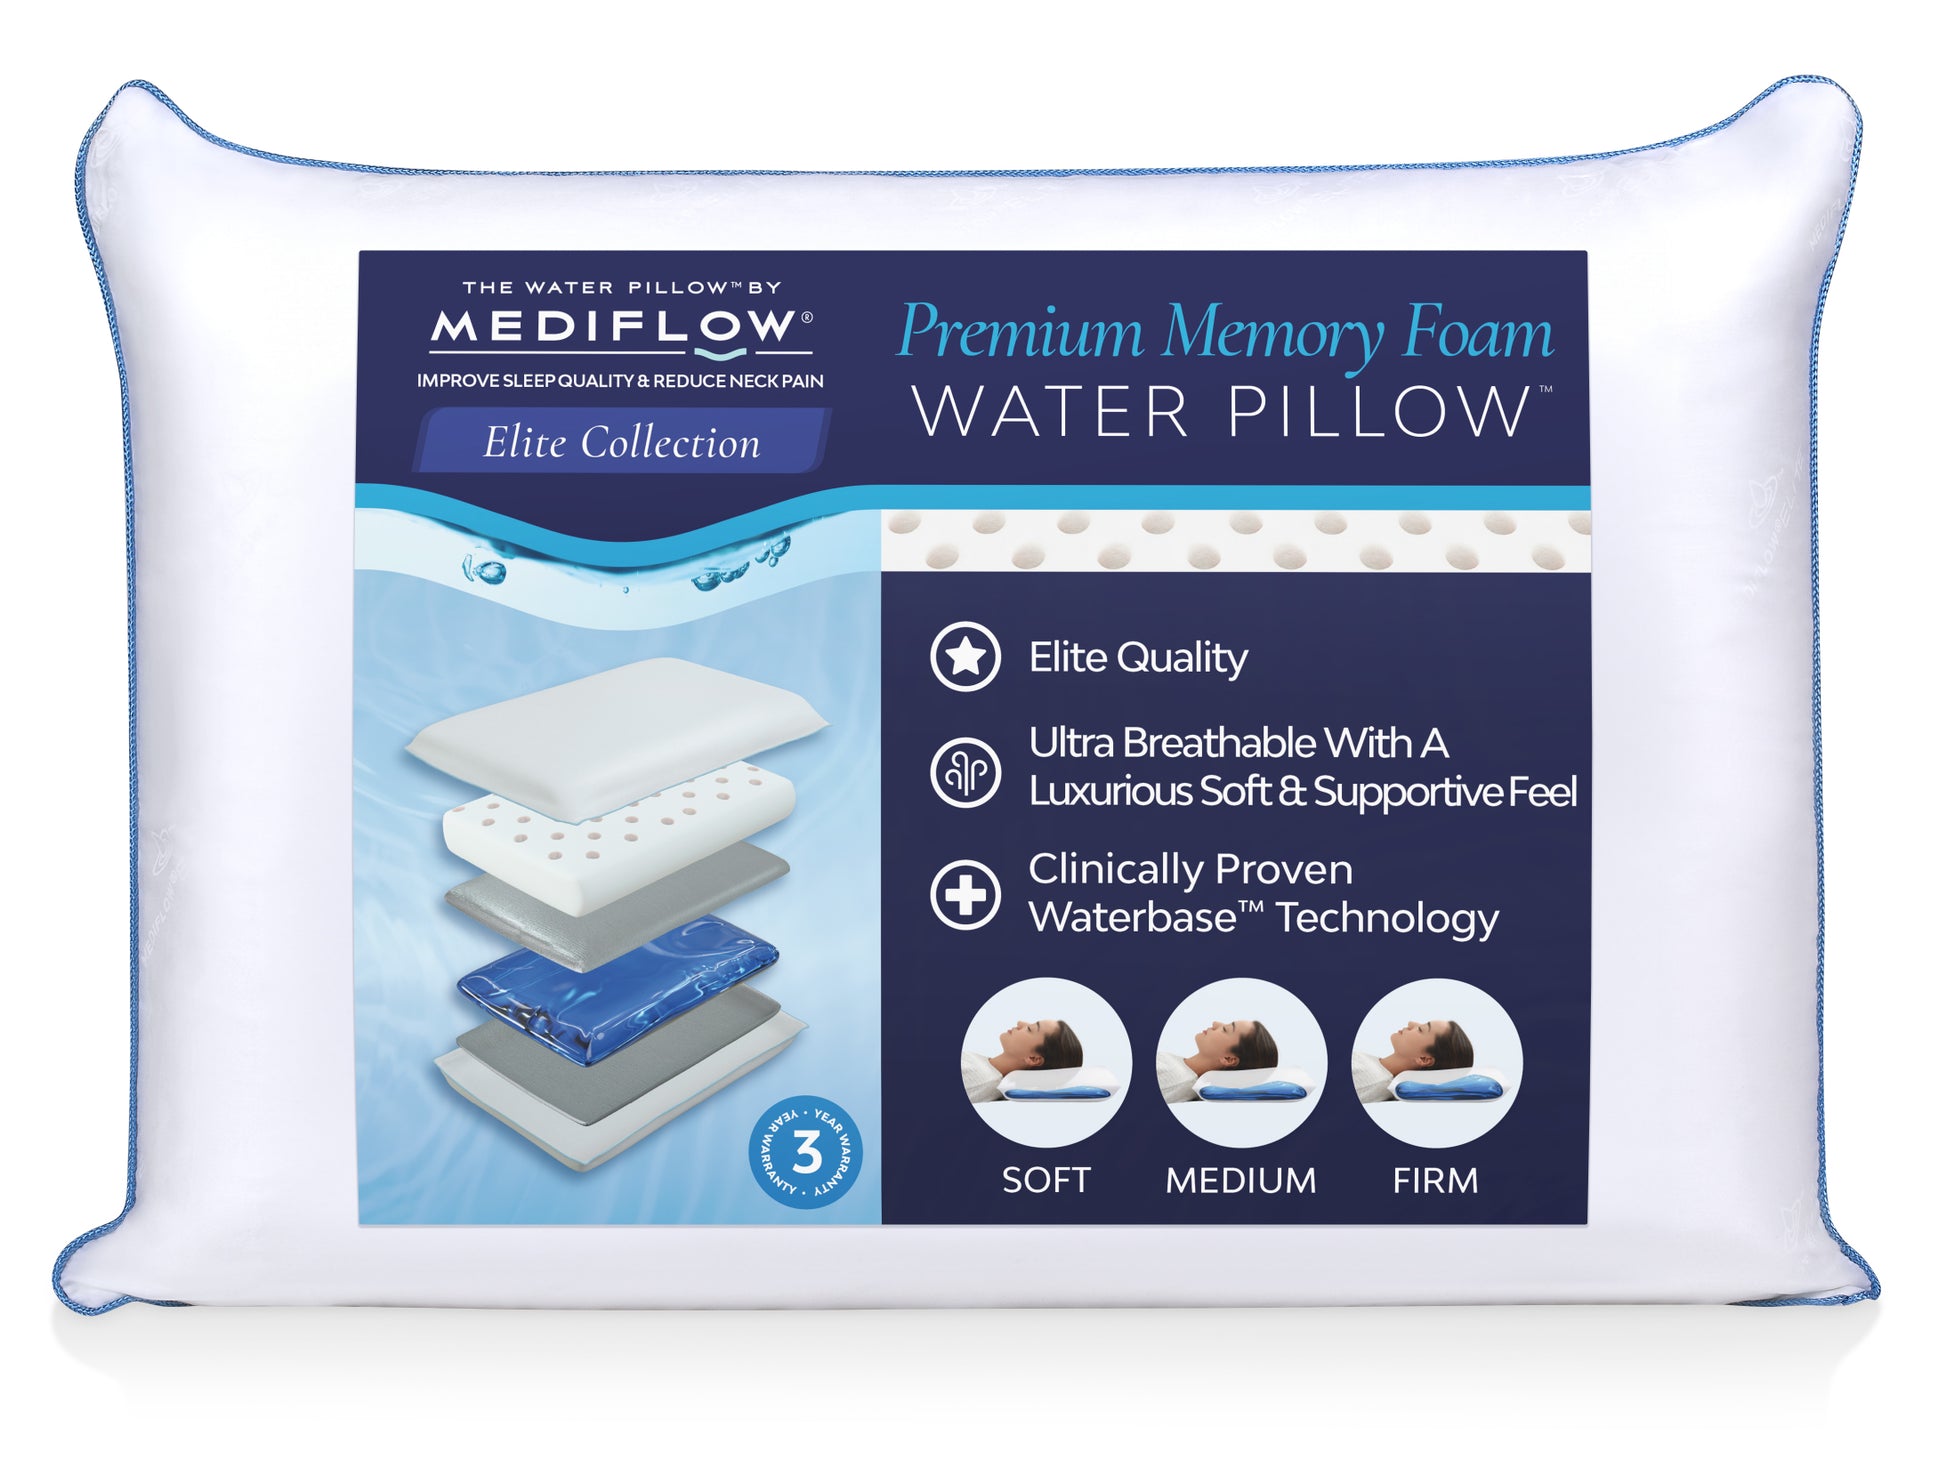 Mediflow Water Pillow Travel Size